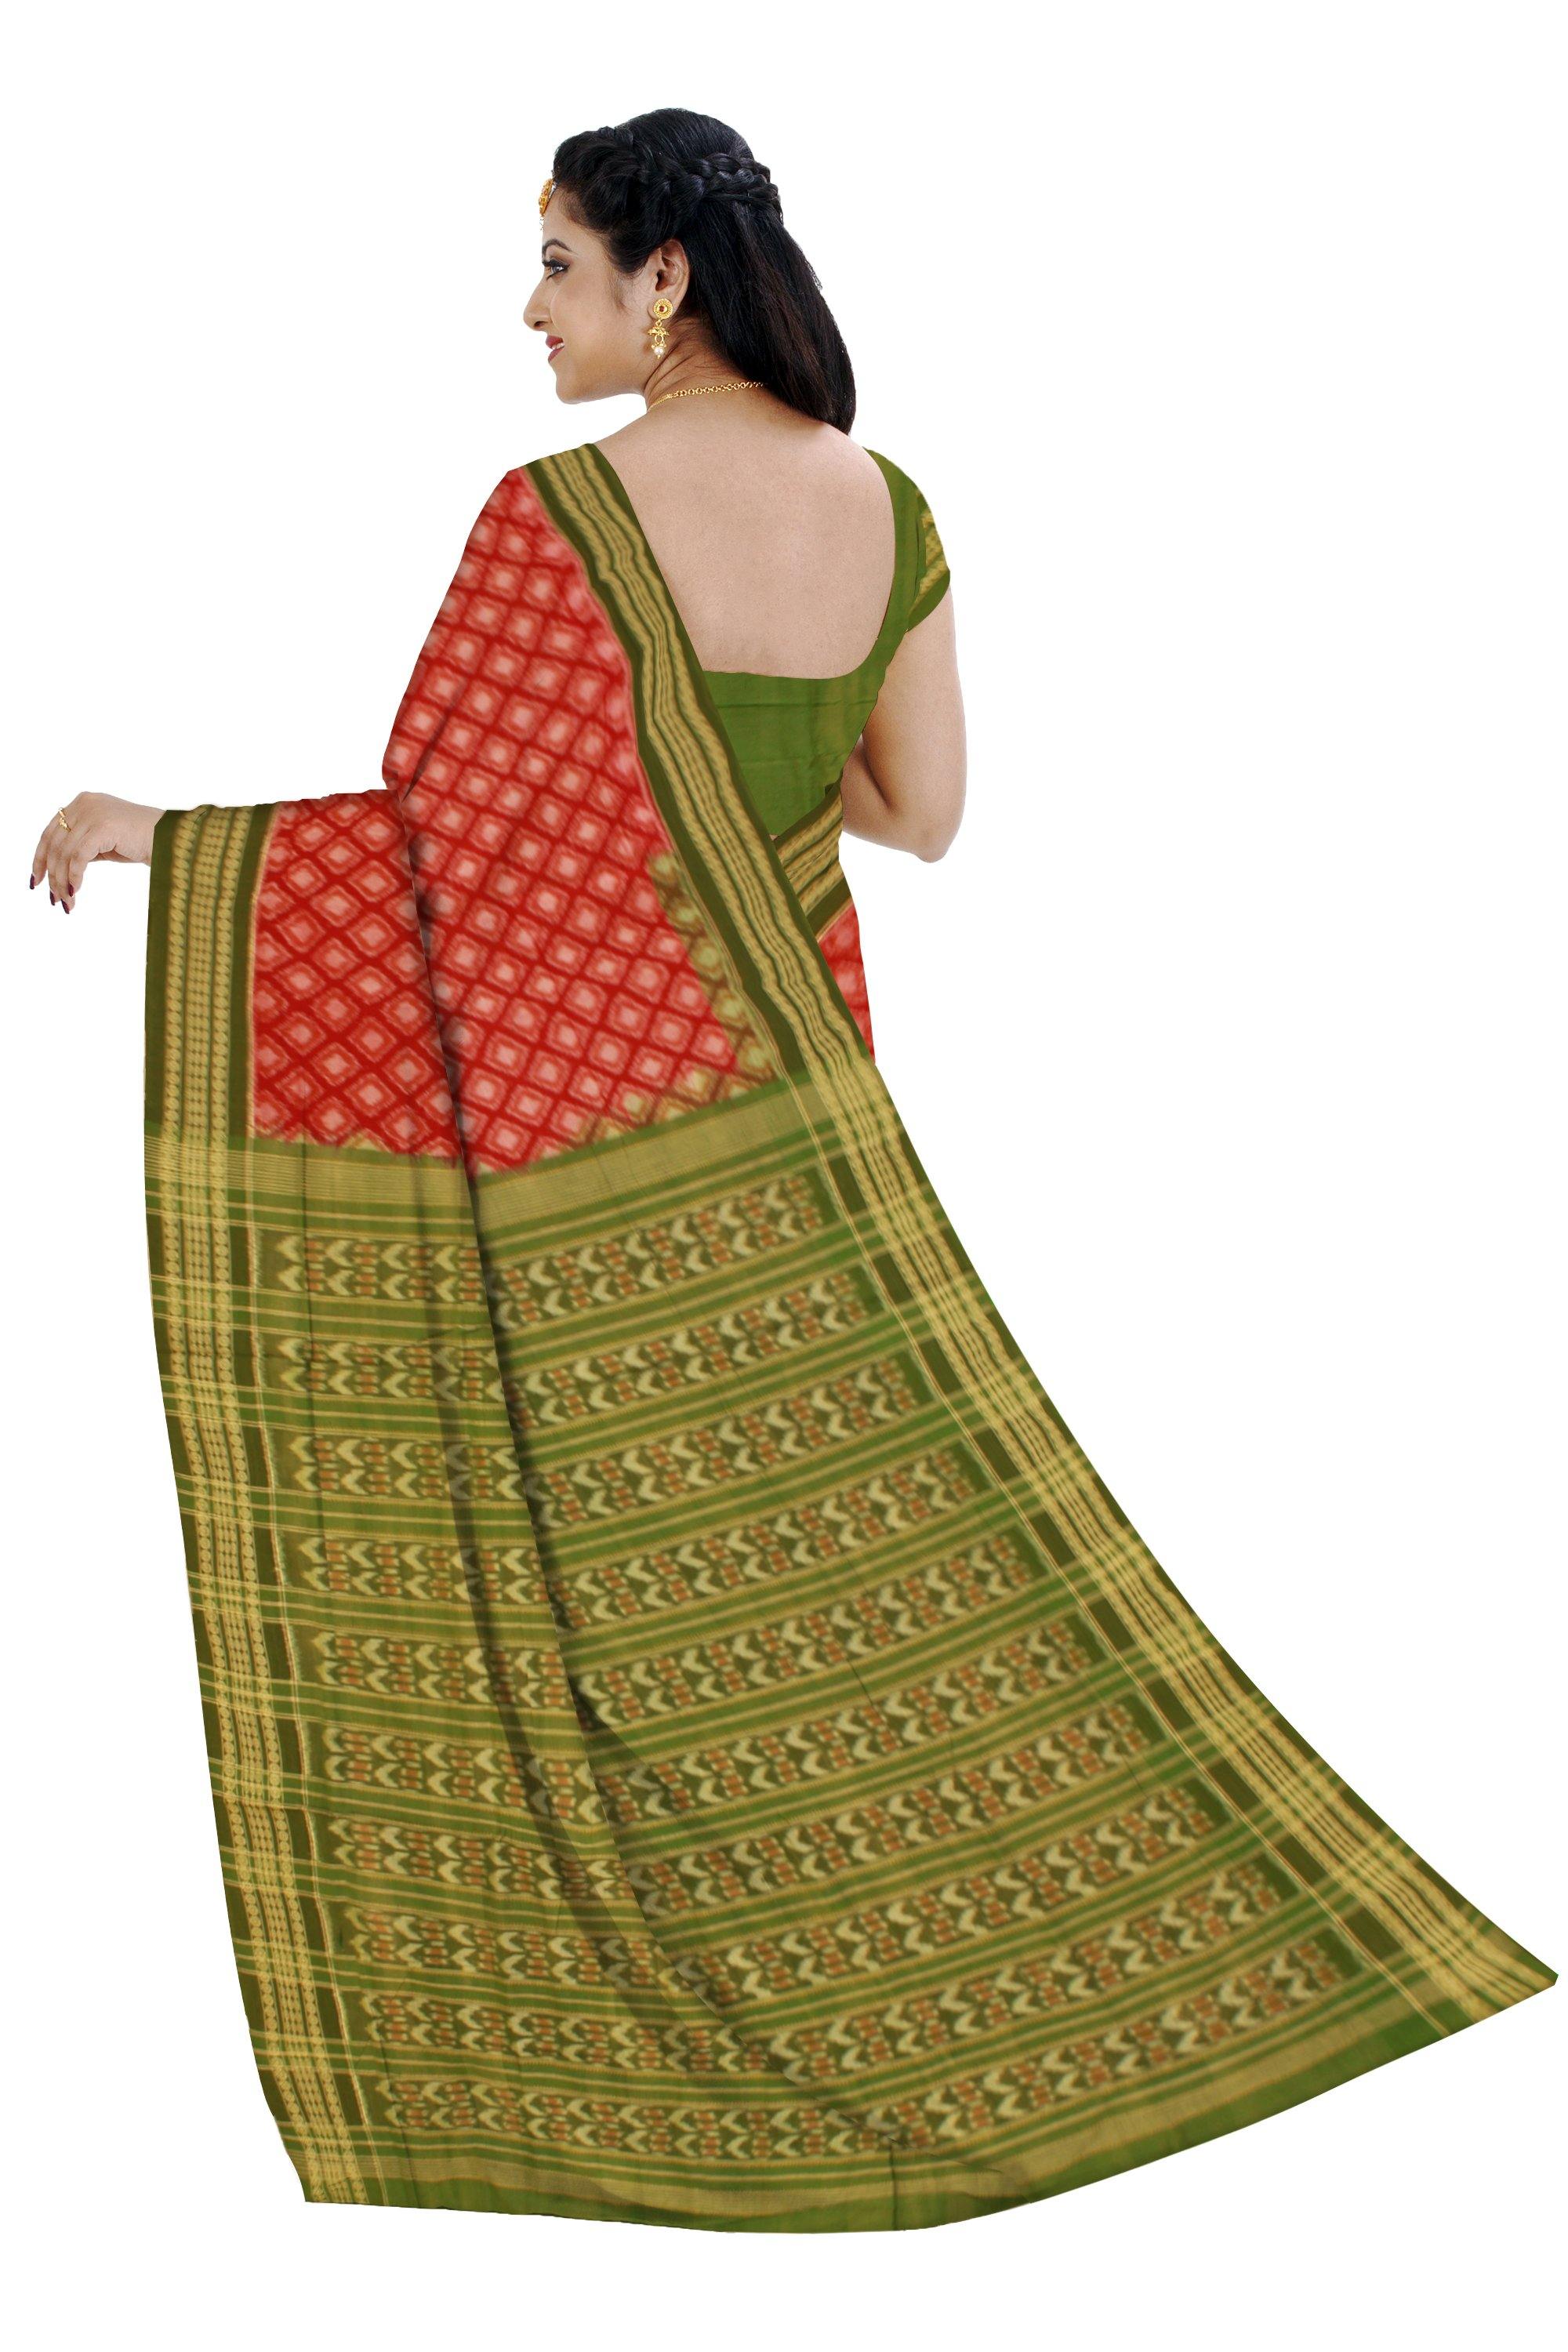 Sambalpuri IKAT Cotton, with Maroon Rudrakshya dobby Body & Green Pallu with Blouse piece - Koshali Arts & Crafts Enterprise